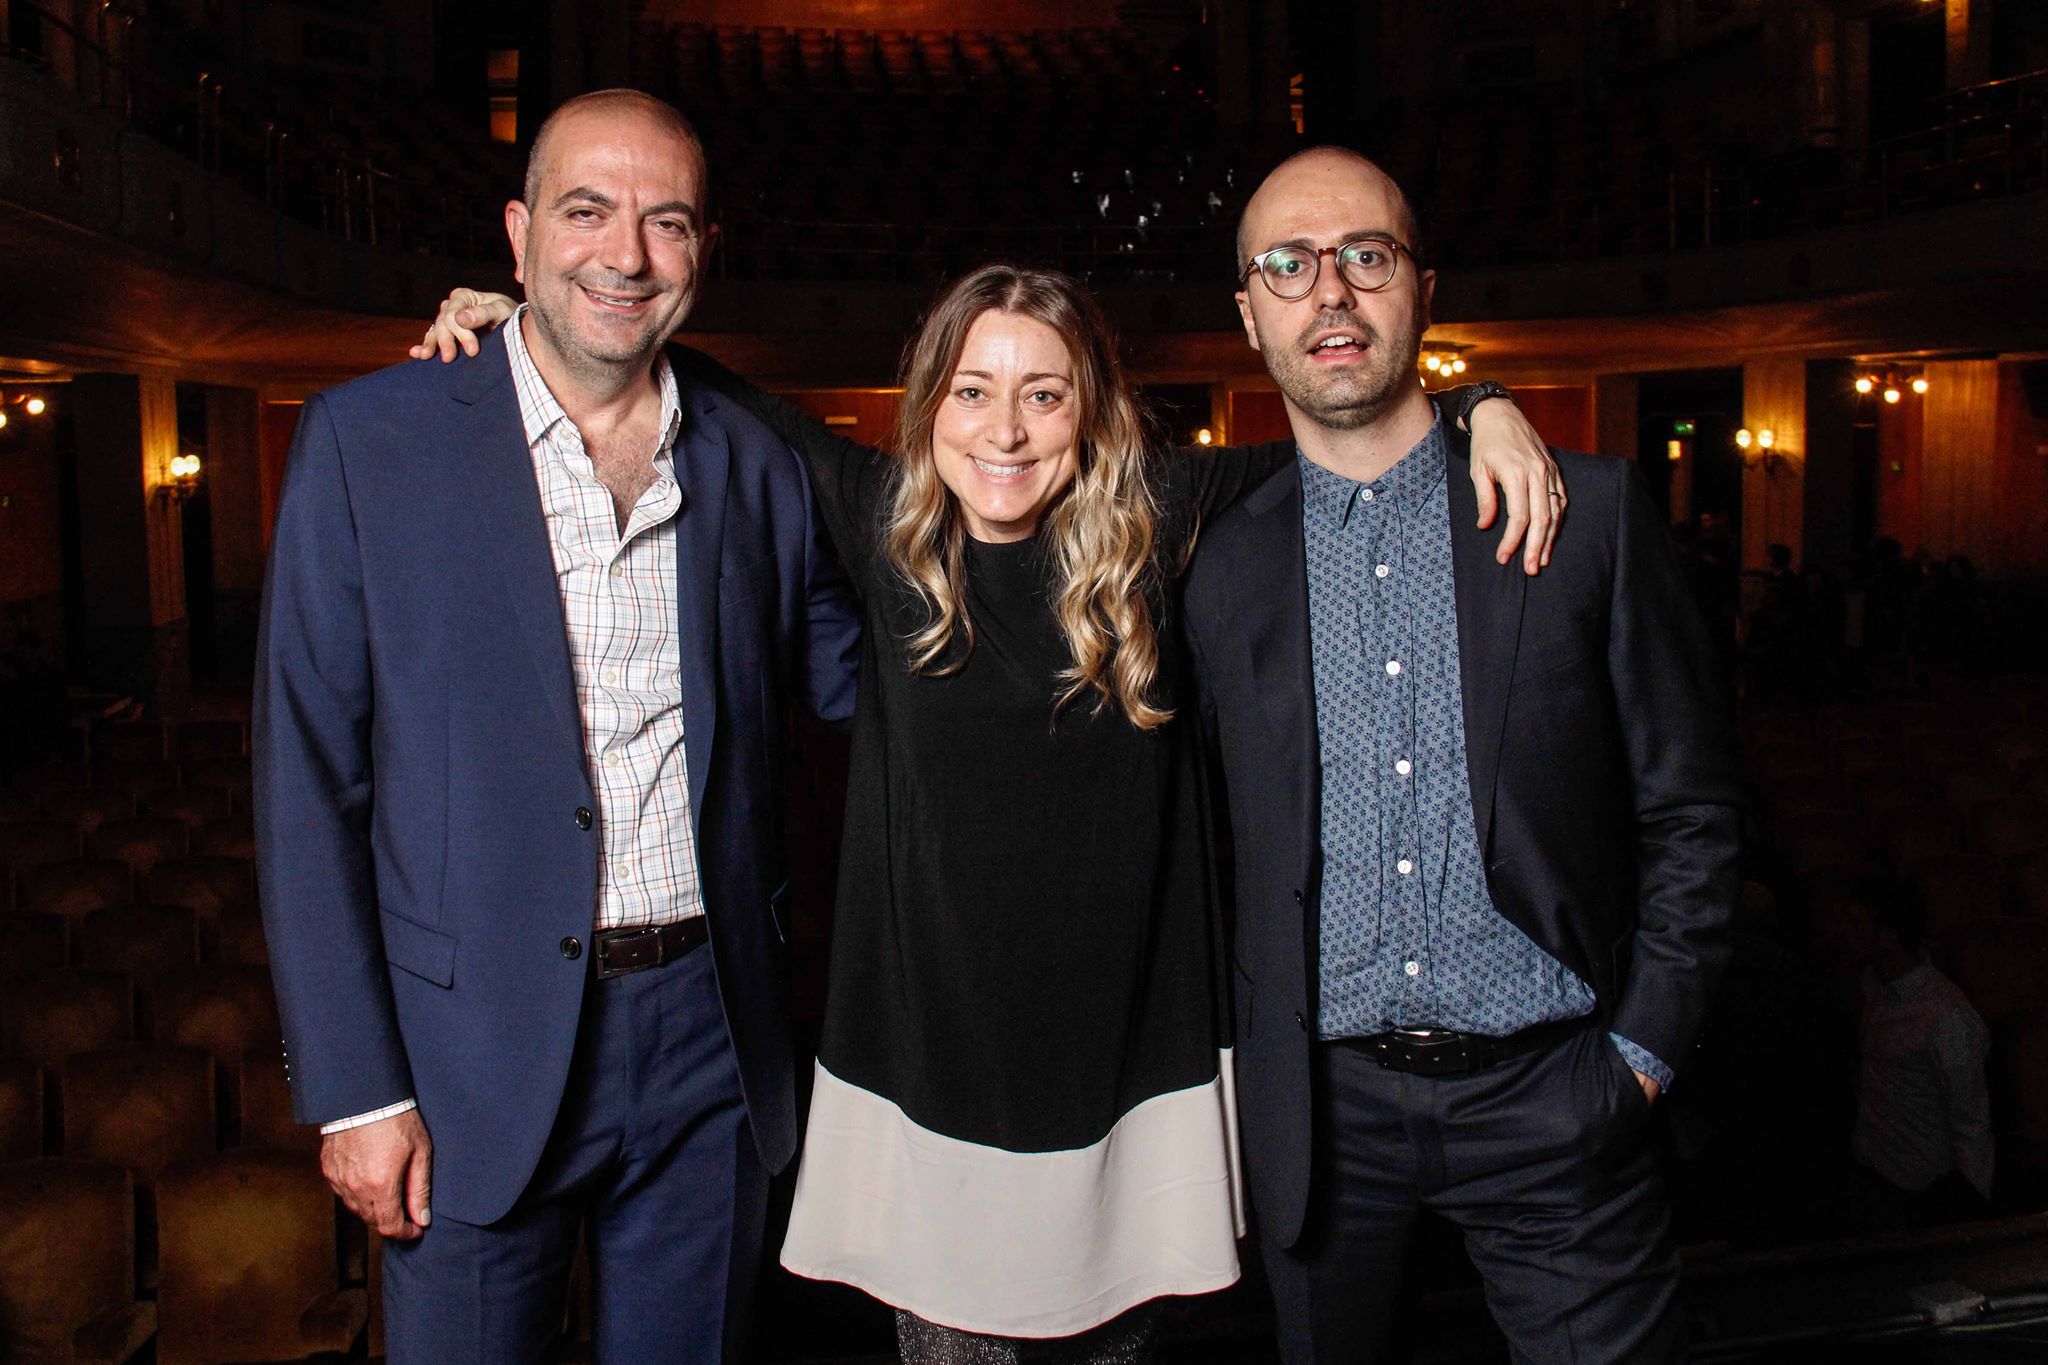 Palestinian director Hany Abu-Assad, festival directors Lisa Chiari and Roberto Ruta - Openig Night